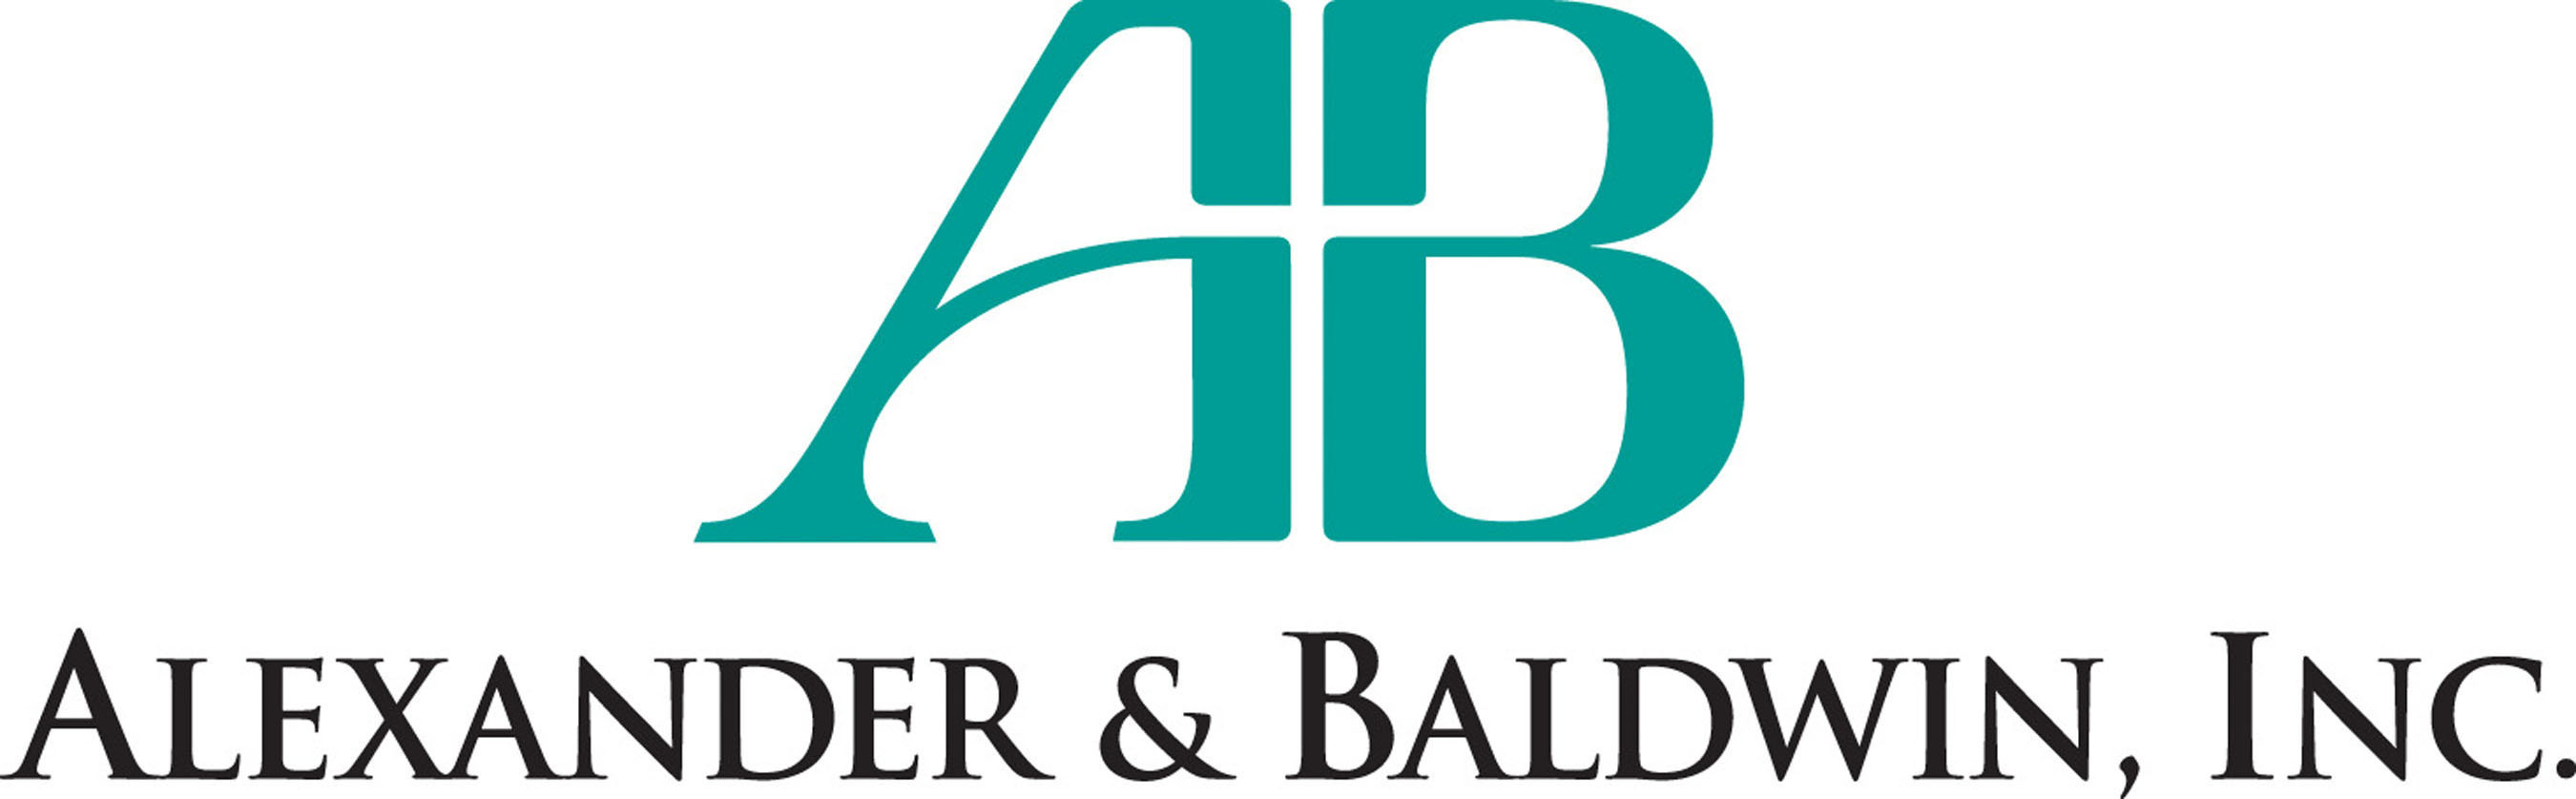 Alexander & Baldwin, Inc. Logo. (PRNewsFoto/Alexander & Baldwin, Inc.) (PRNewsFoto/)